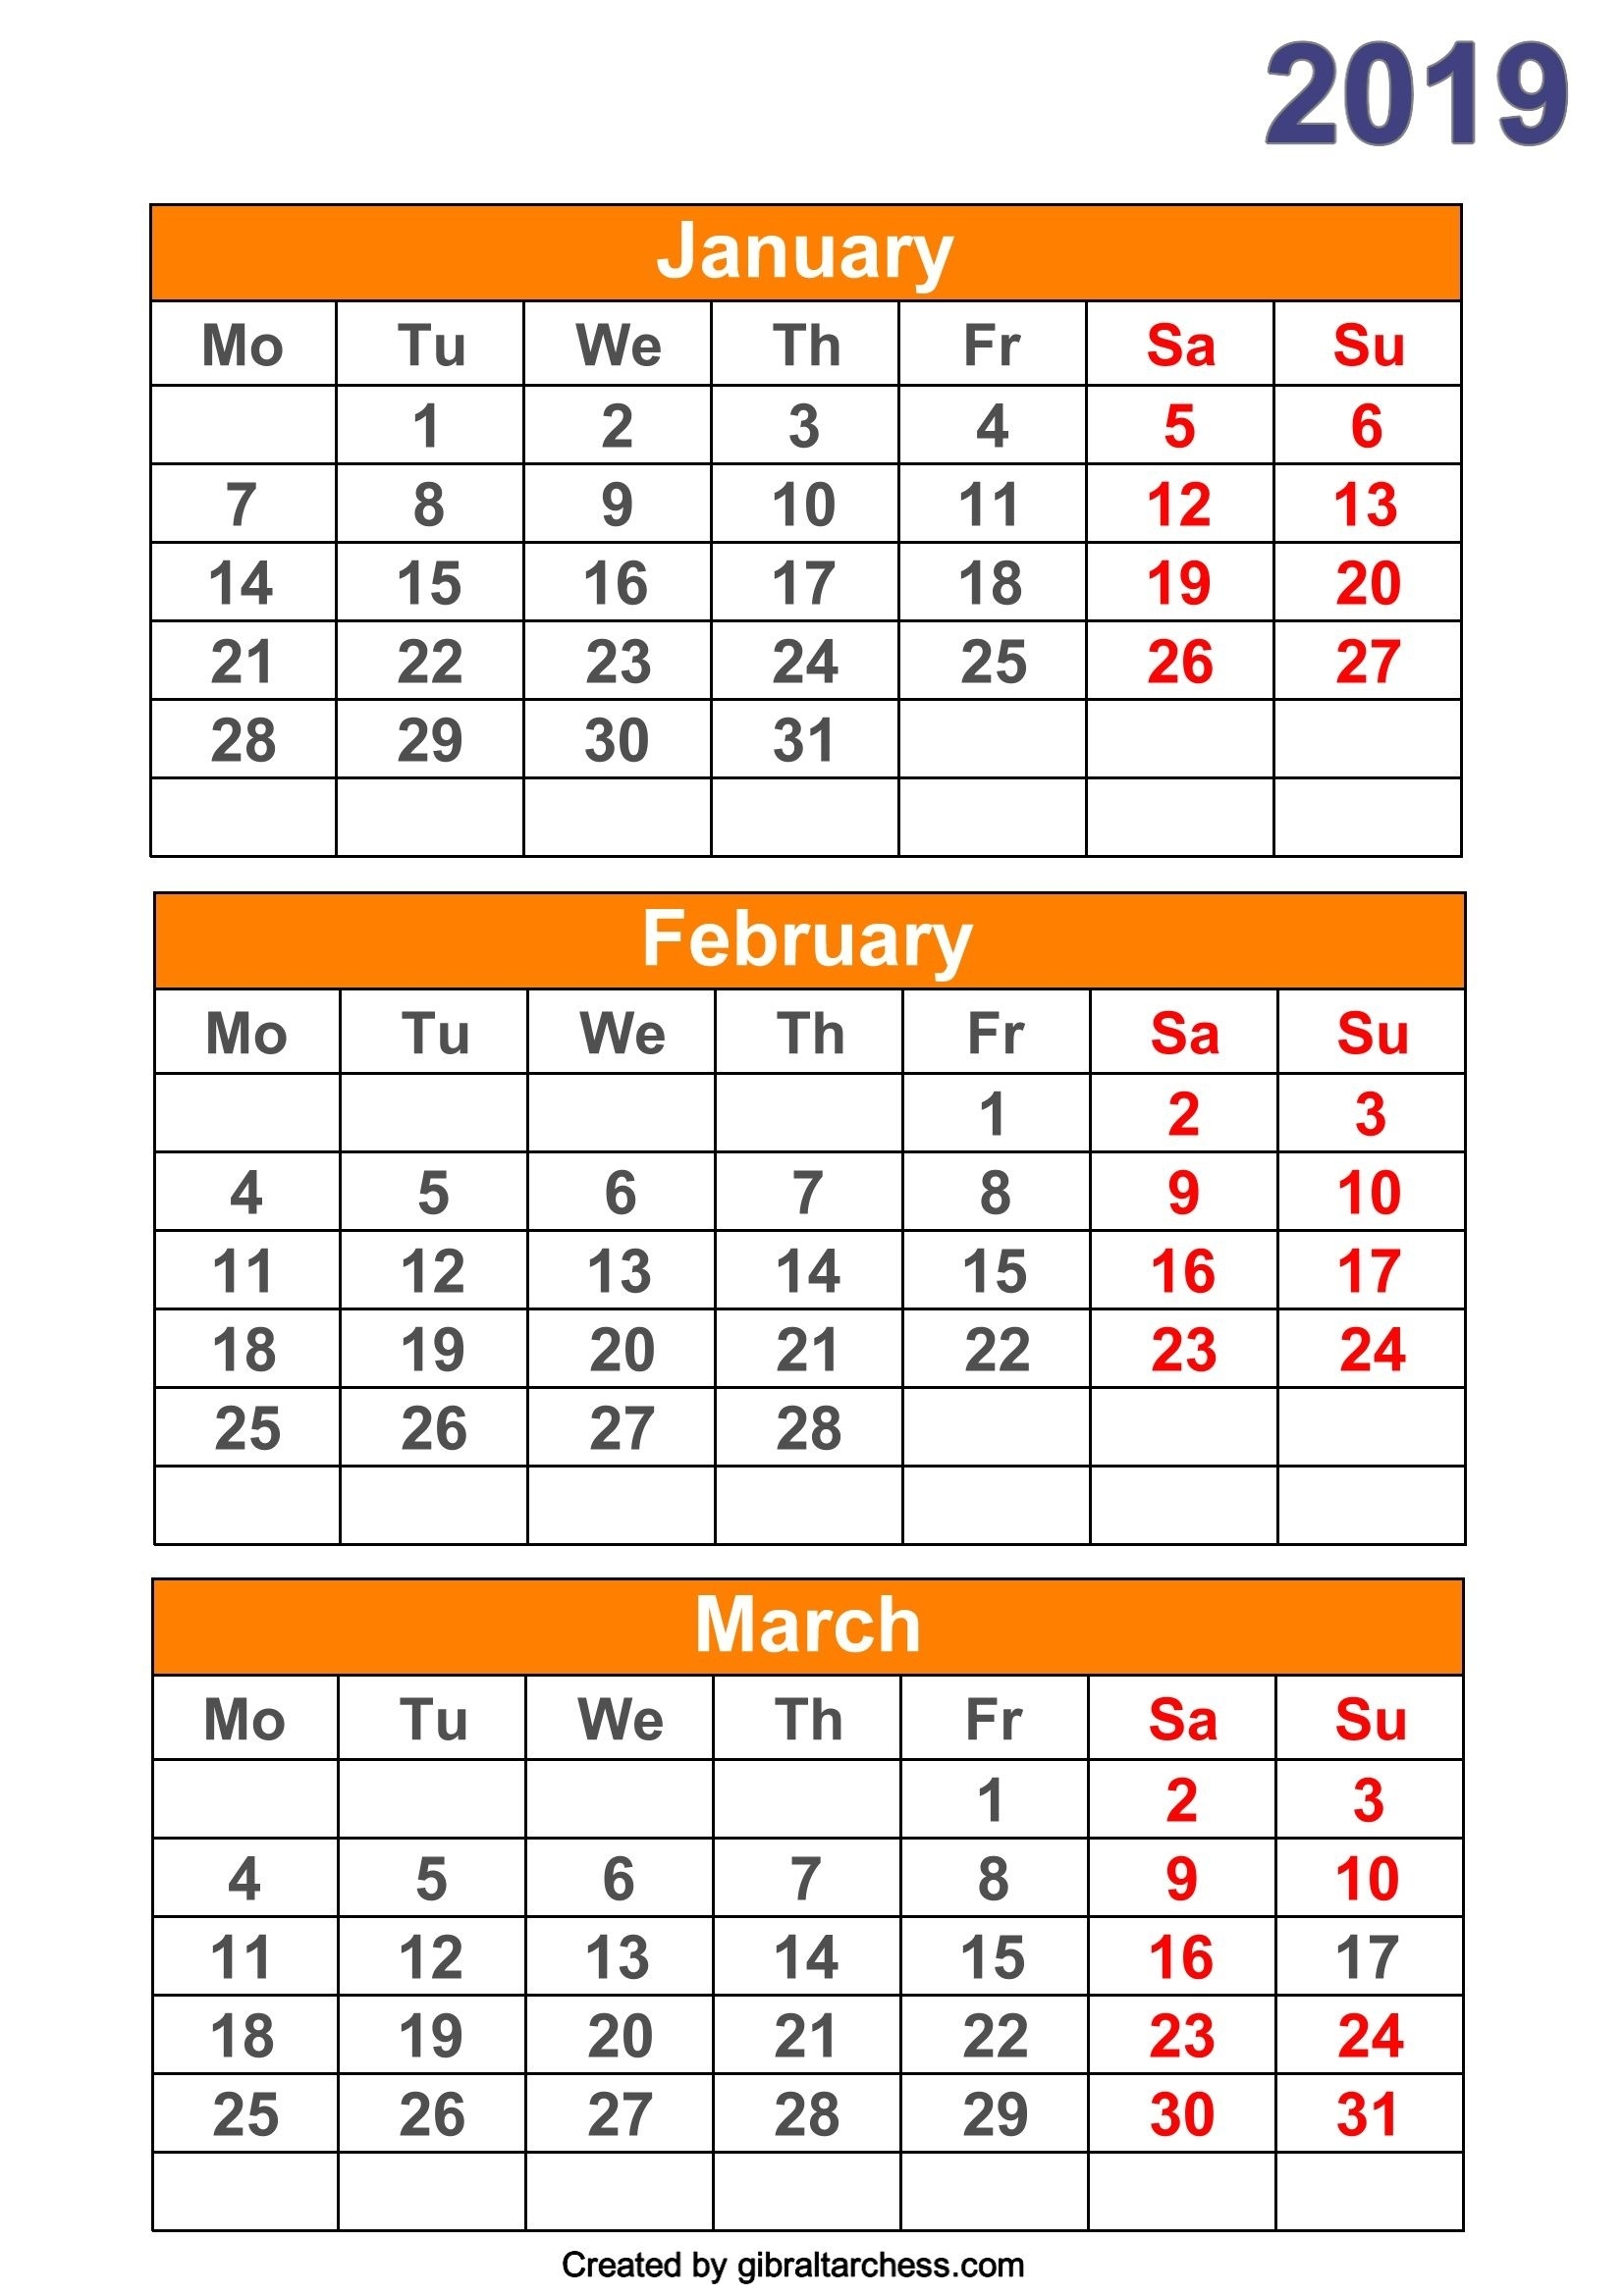 2019 Calendar 4 Months Per Page Printable | 2019 Calendar Perky Calendar With 4 Months Per Page